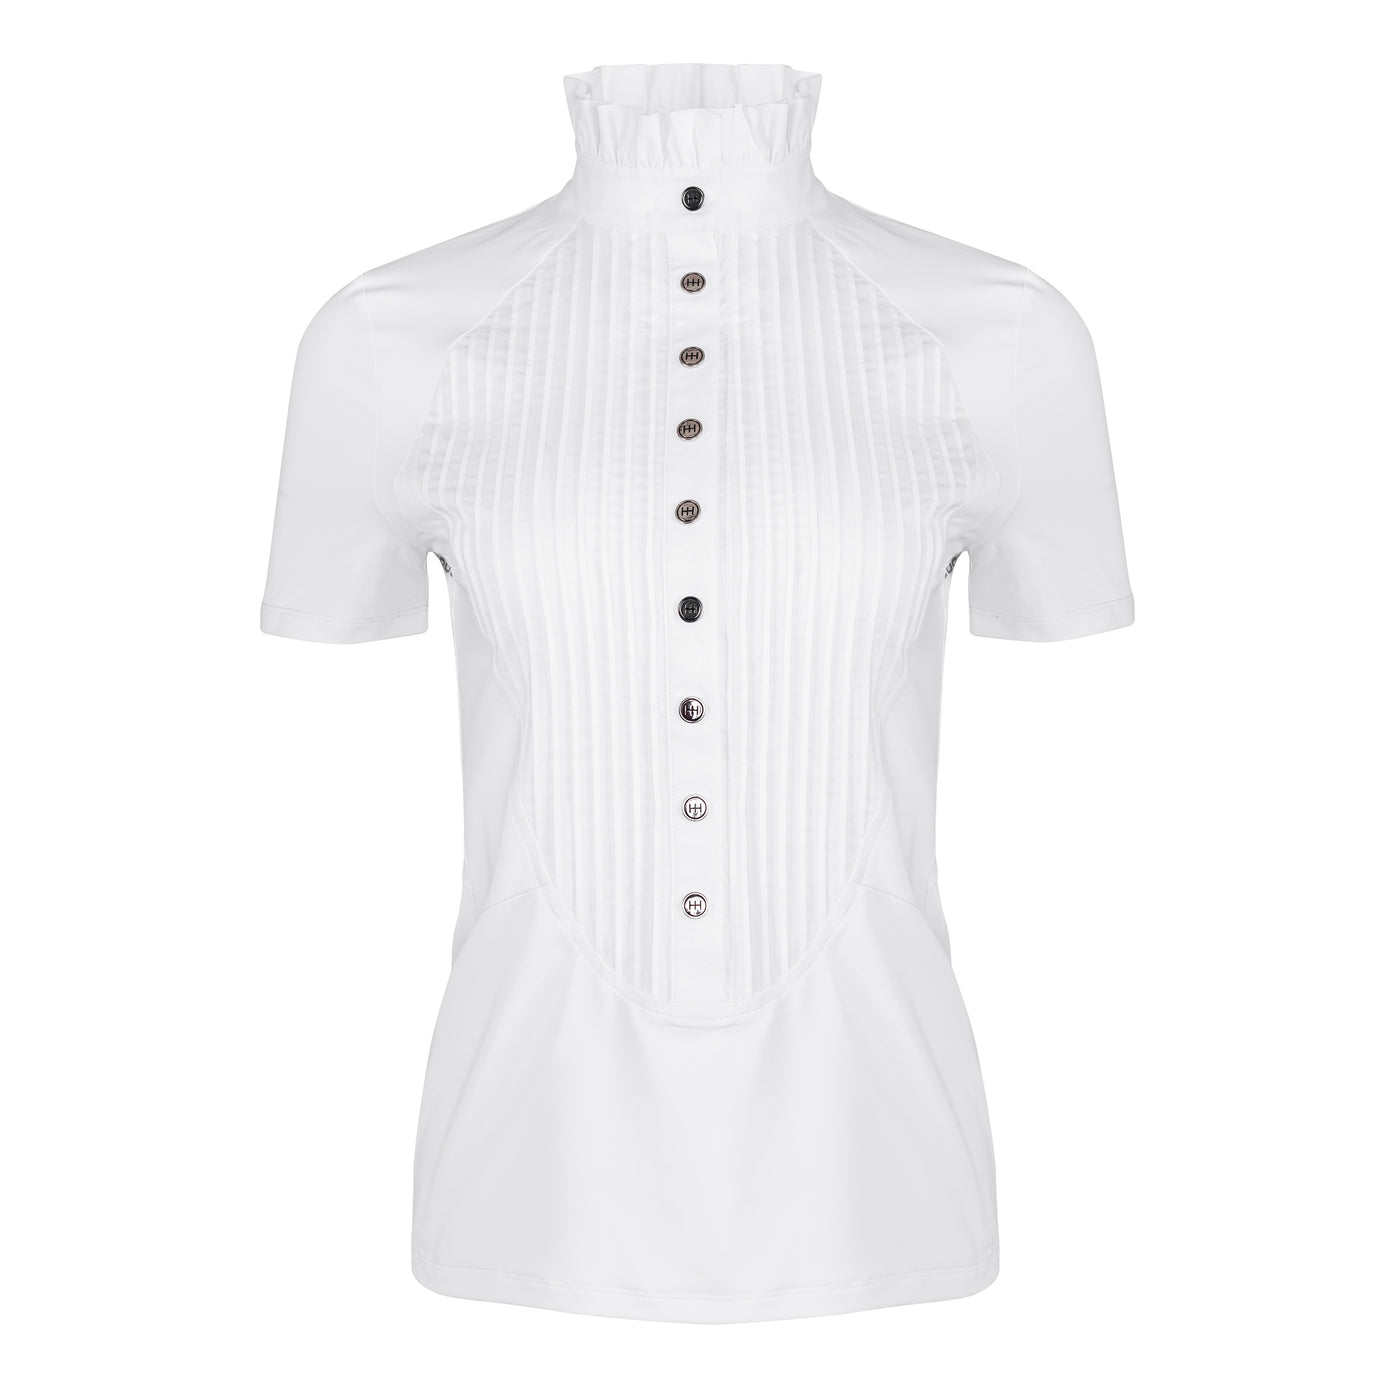 White Short Sleeve Tudor Shirt - PREORDER